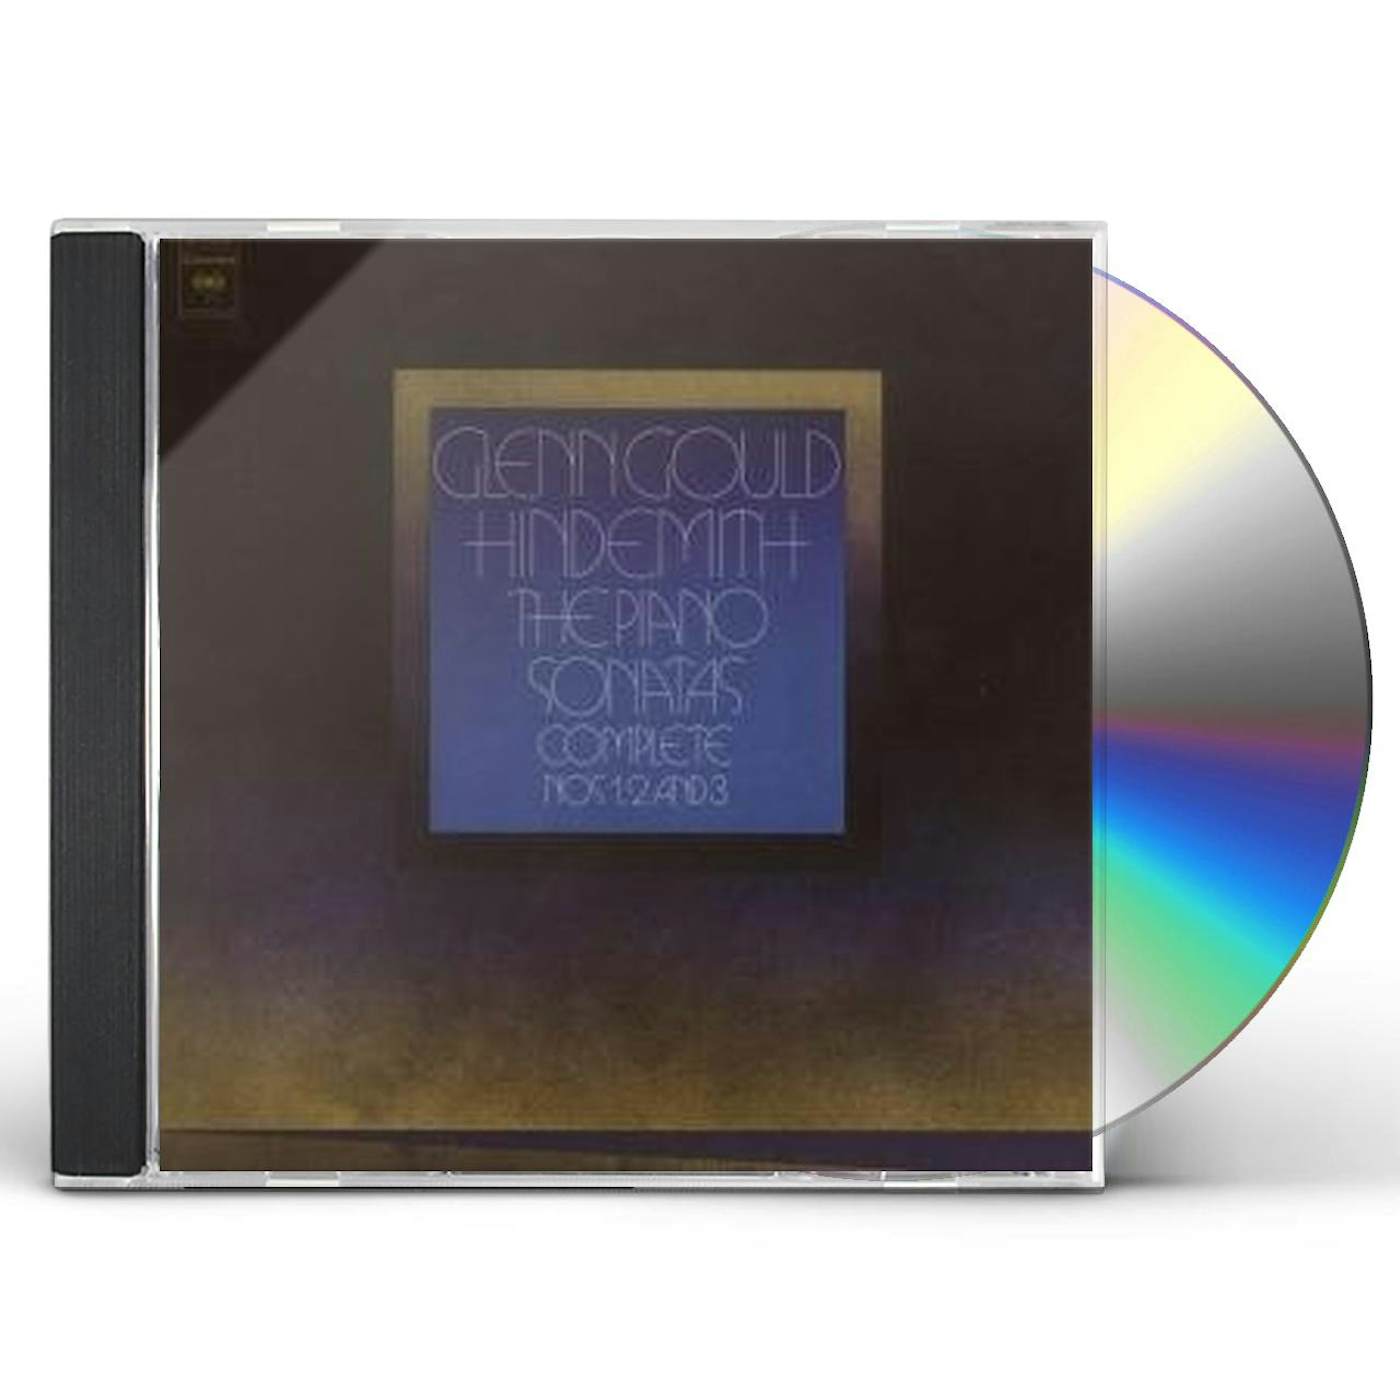 GLENN GOULD PLAYS HINDEMITH'S PIANO SONA CD